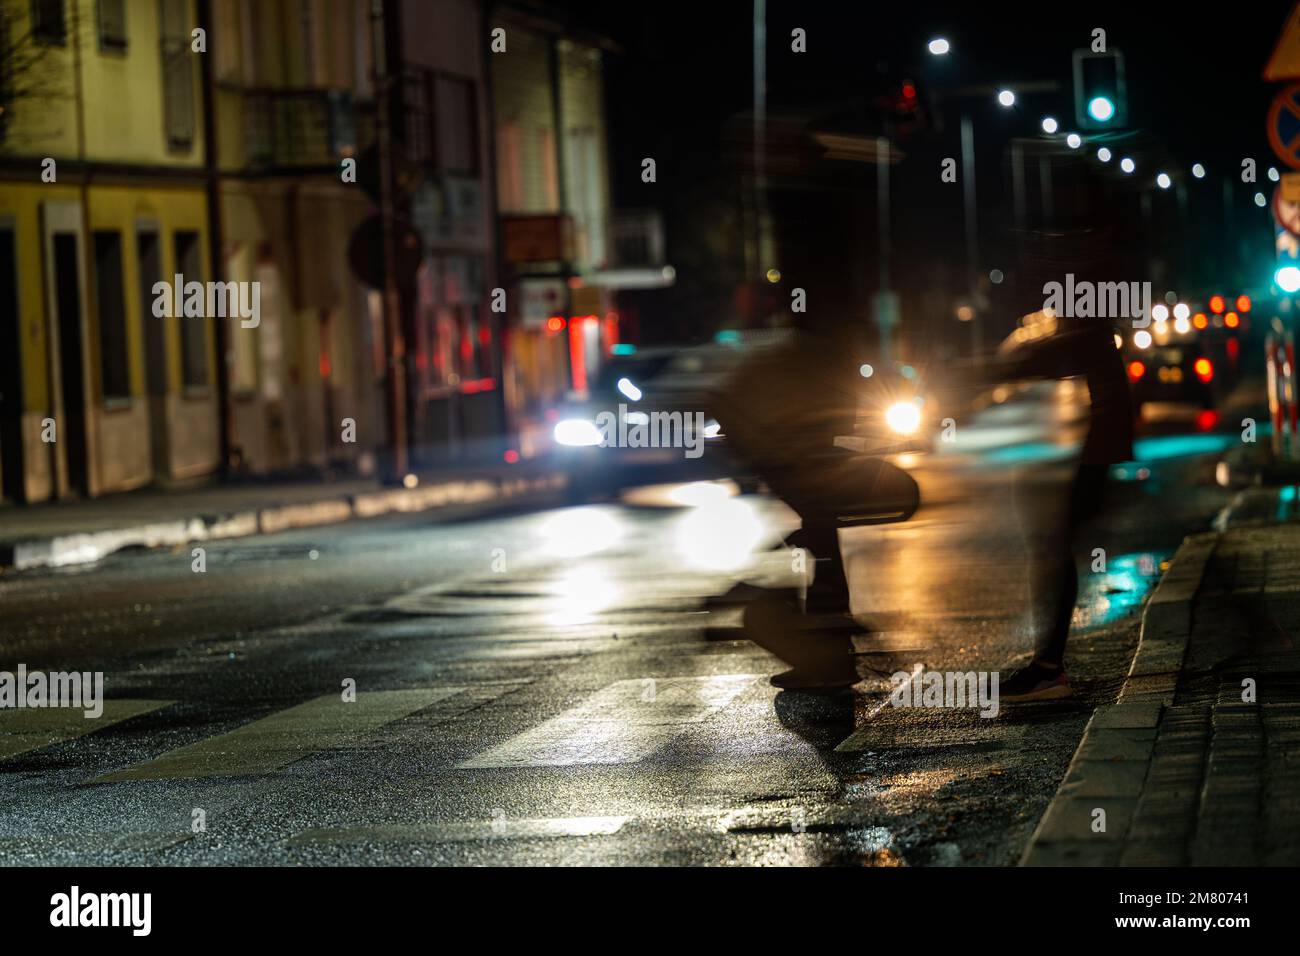 City street night blurred background. Dark dressed pedestrians crossing the street at night.. Bokeh night city life. The city of Ustrzyki Dolne, Polan Stock Photo